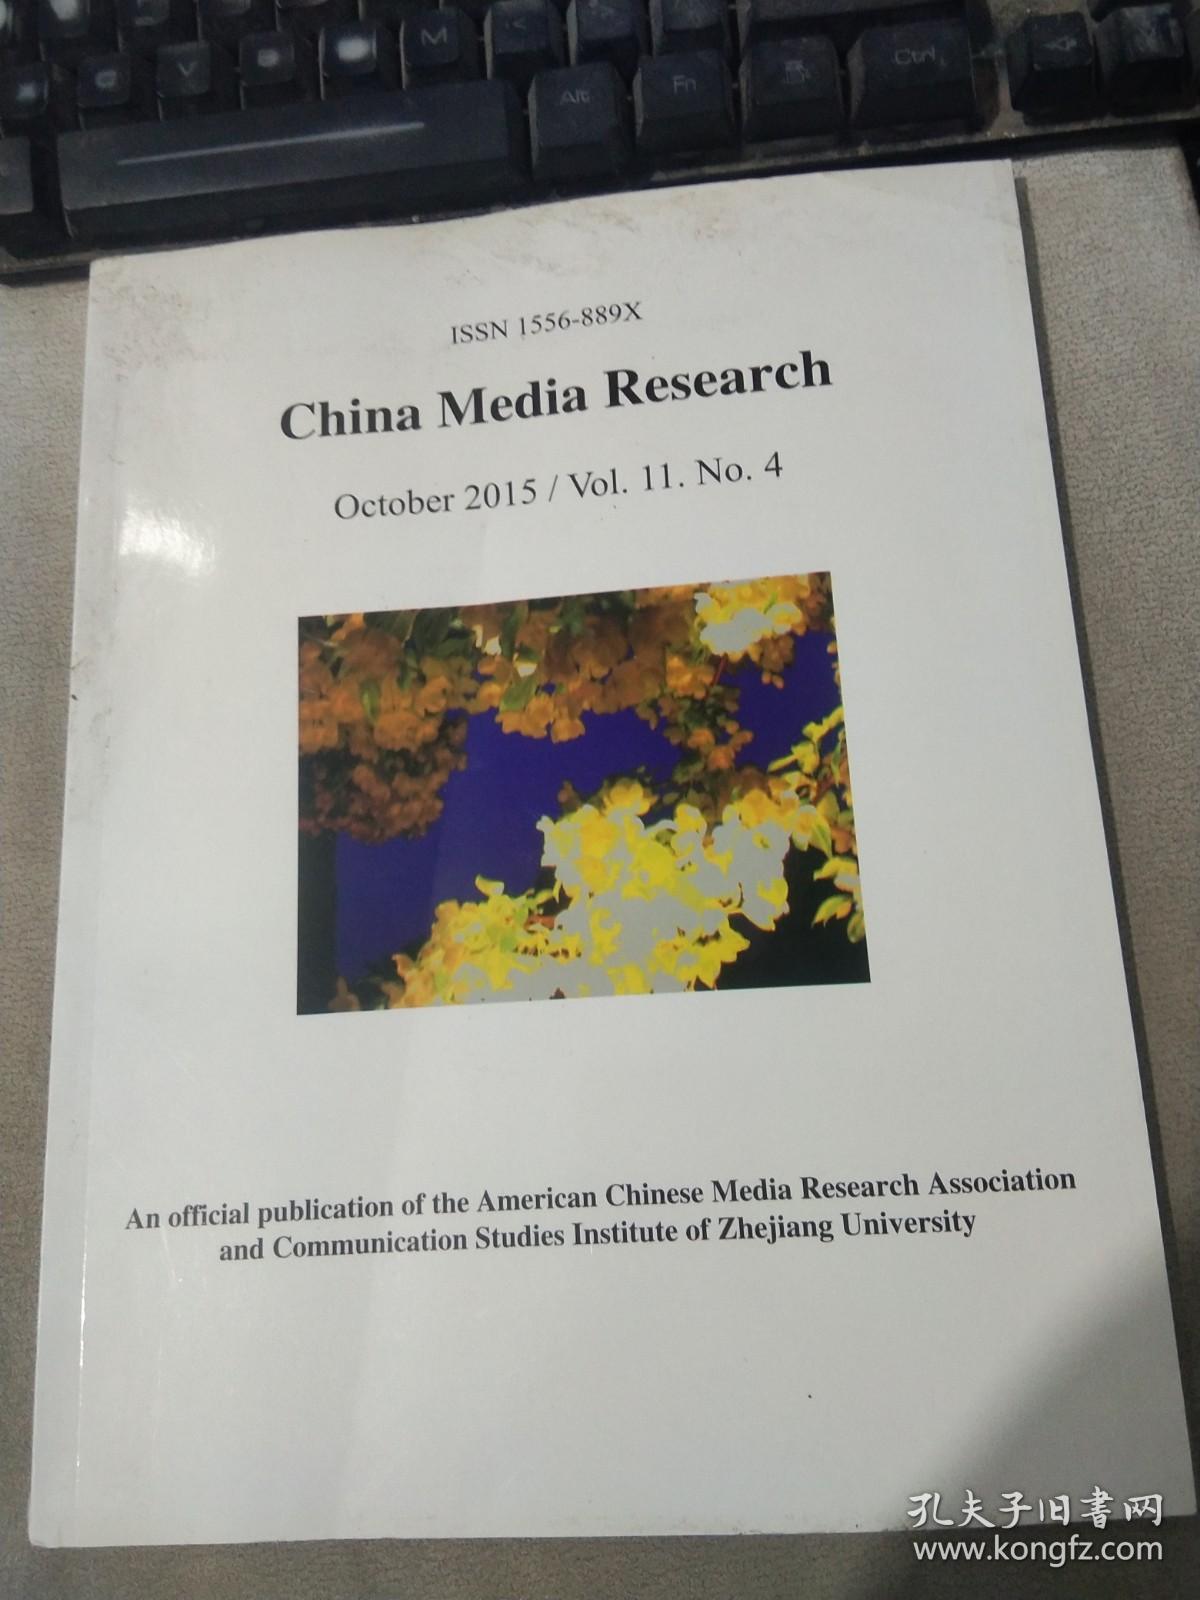 ISSN 1556-889X  China Media Research October 2015 / Vol. 11. No. 4  ISSN 1556-889X 中国媒体研究 2015 年 10 月 / Vol.11. 4号